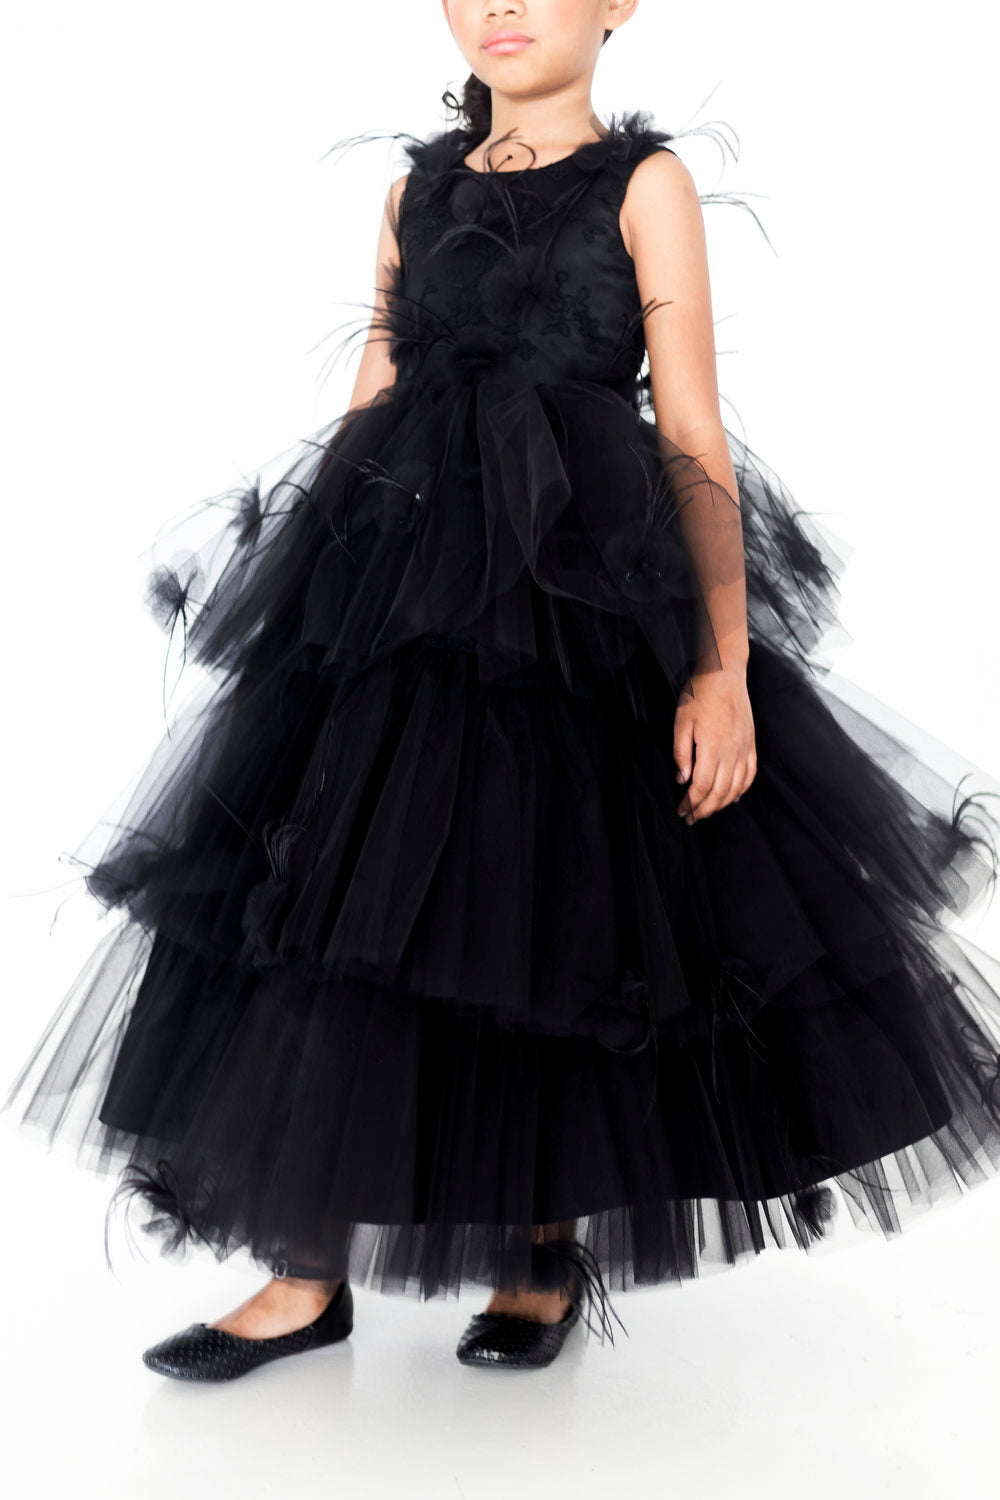 Simple black v neck tulle long prom dress, black evening dress · Dress idea  · Online Store Powered by Storenvy